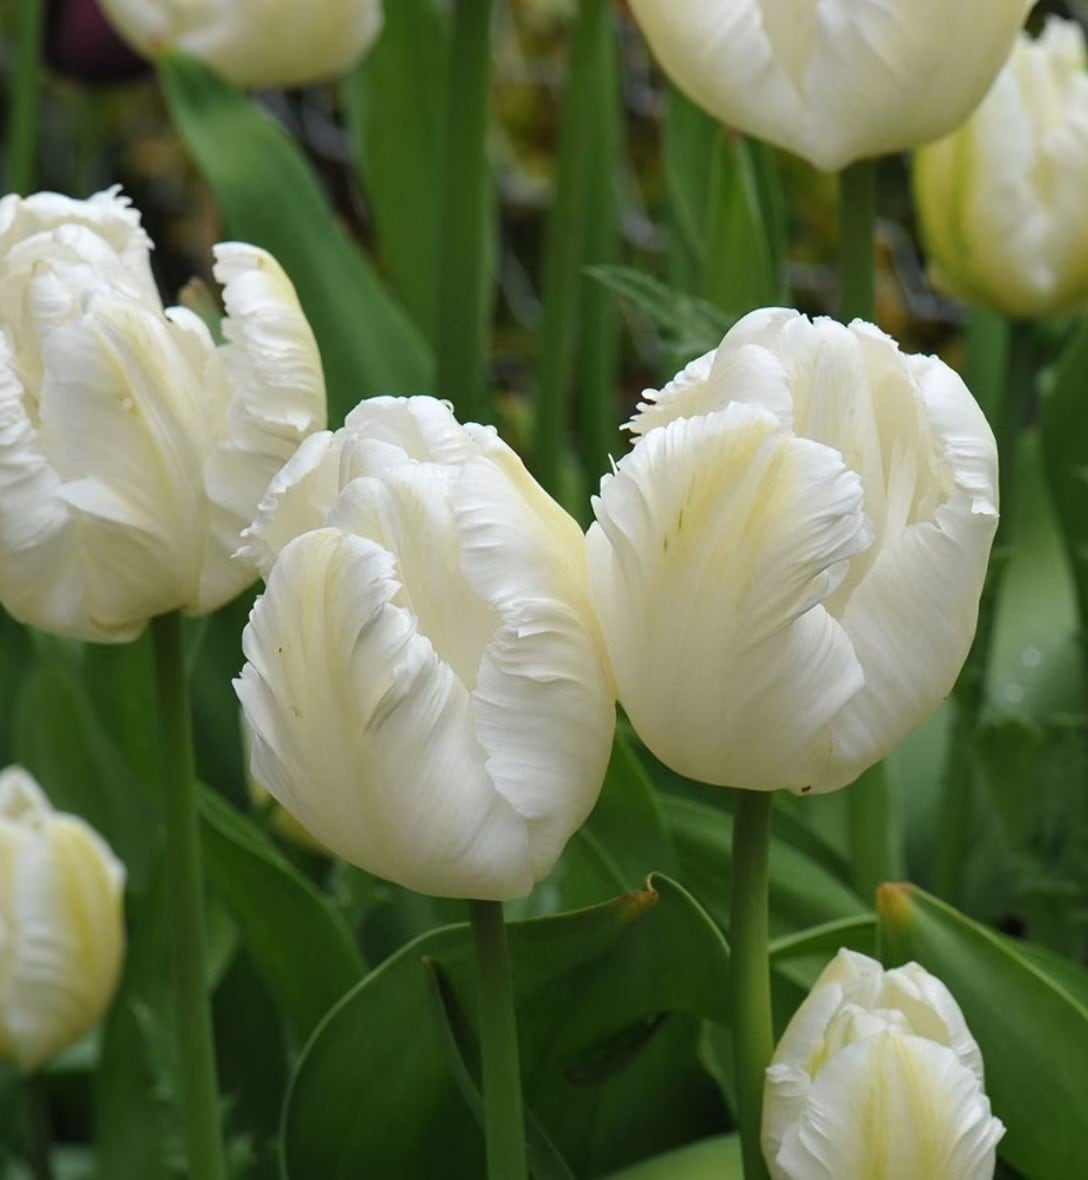 Classic white tulips